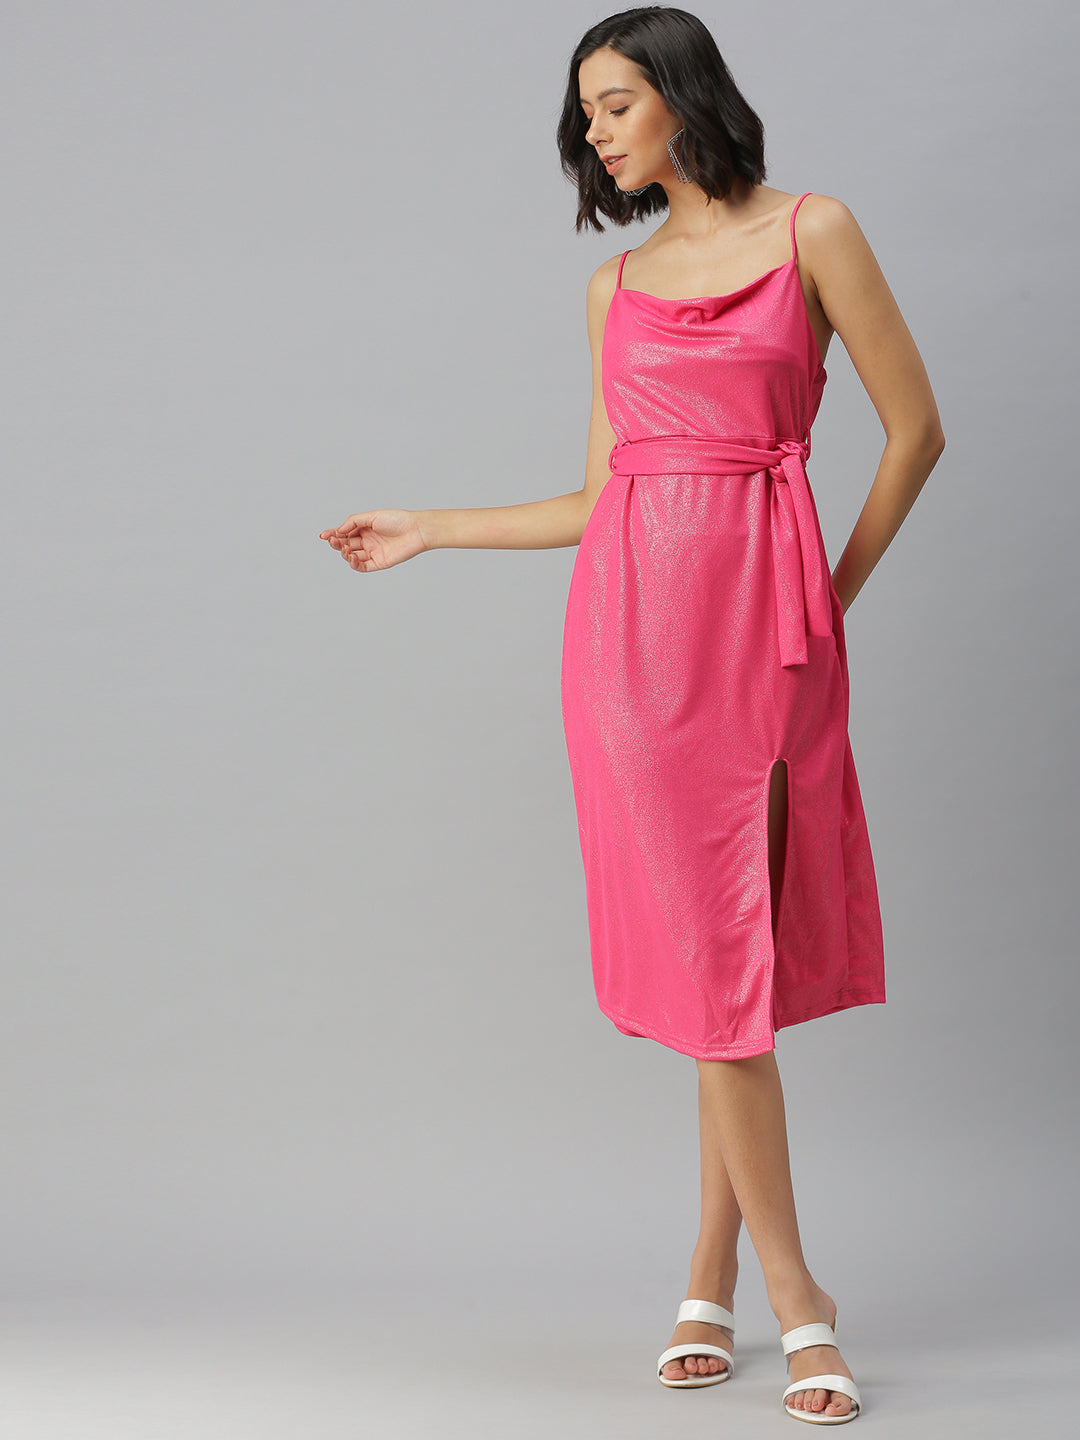 Women's Pink Solid Sheath Dress